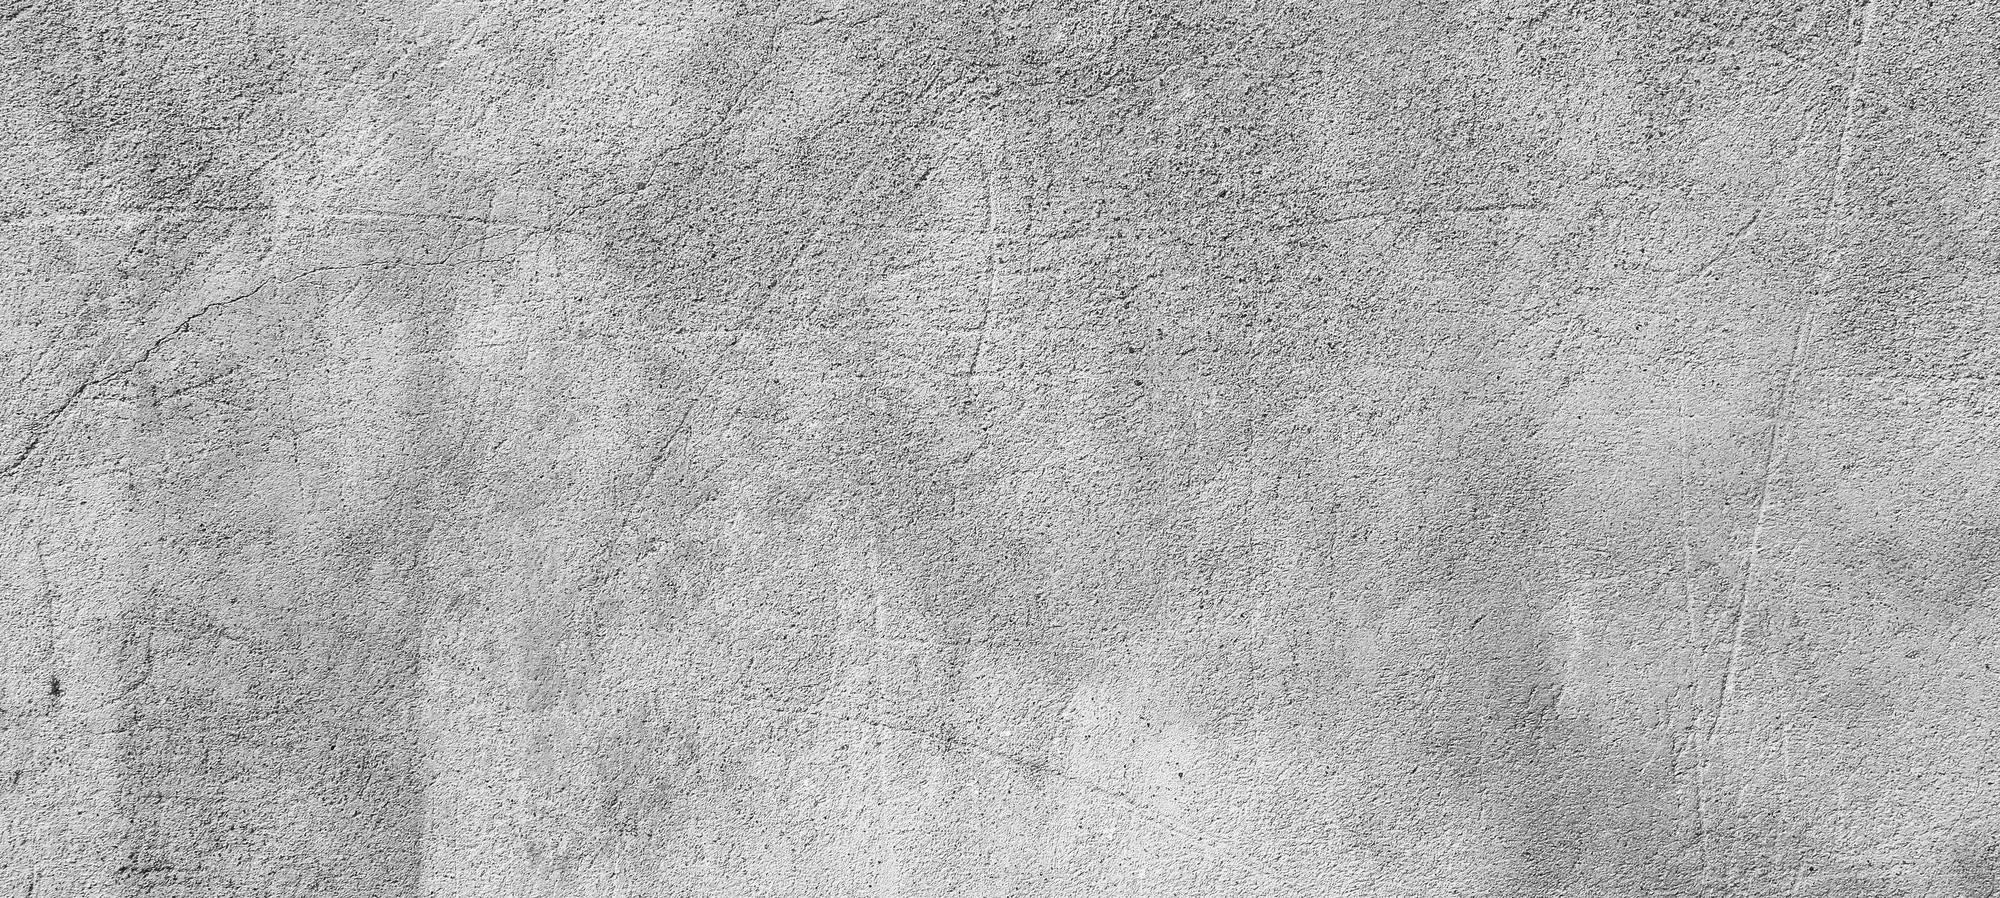 Premium Photo Grunge Cement Wallpaper Stucco Wall Background